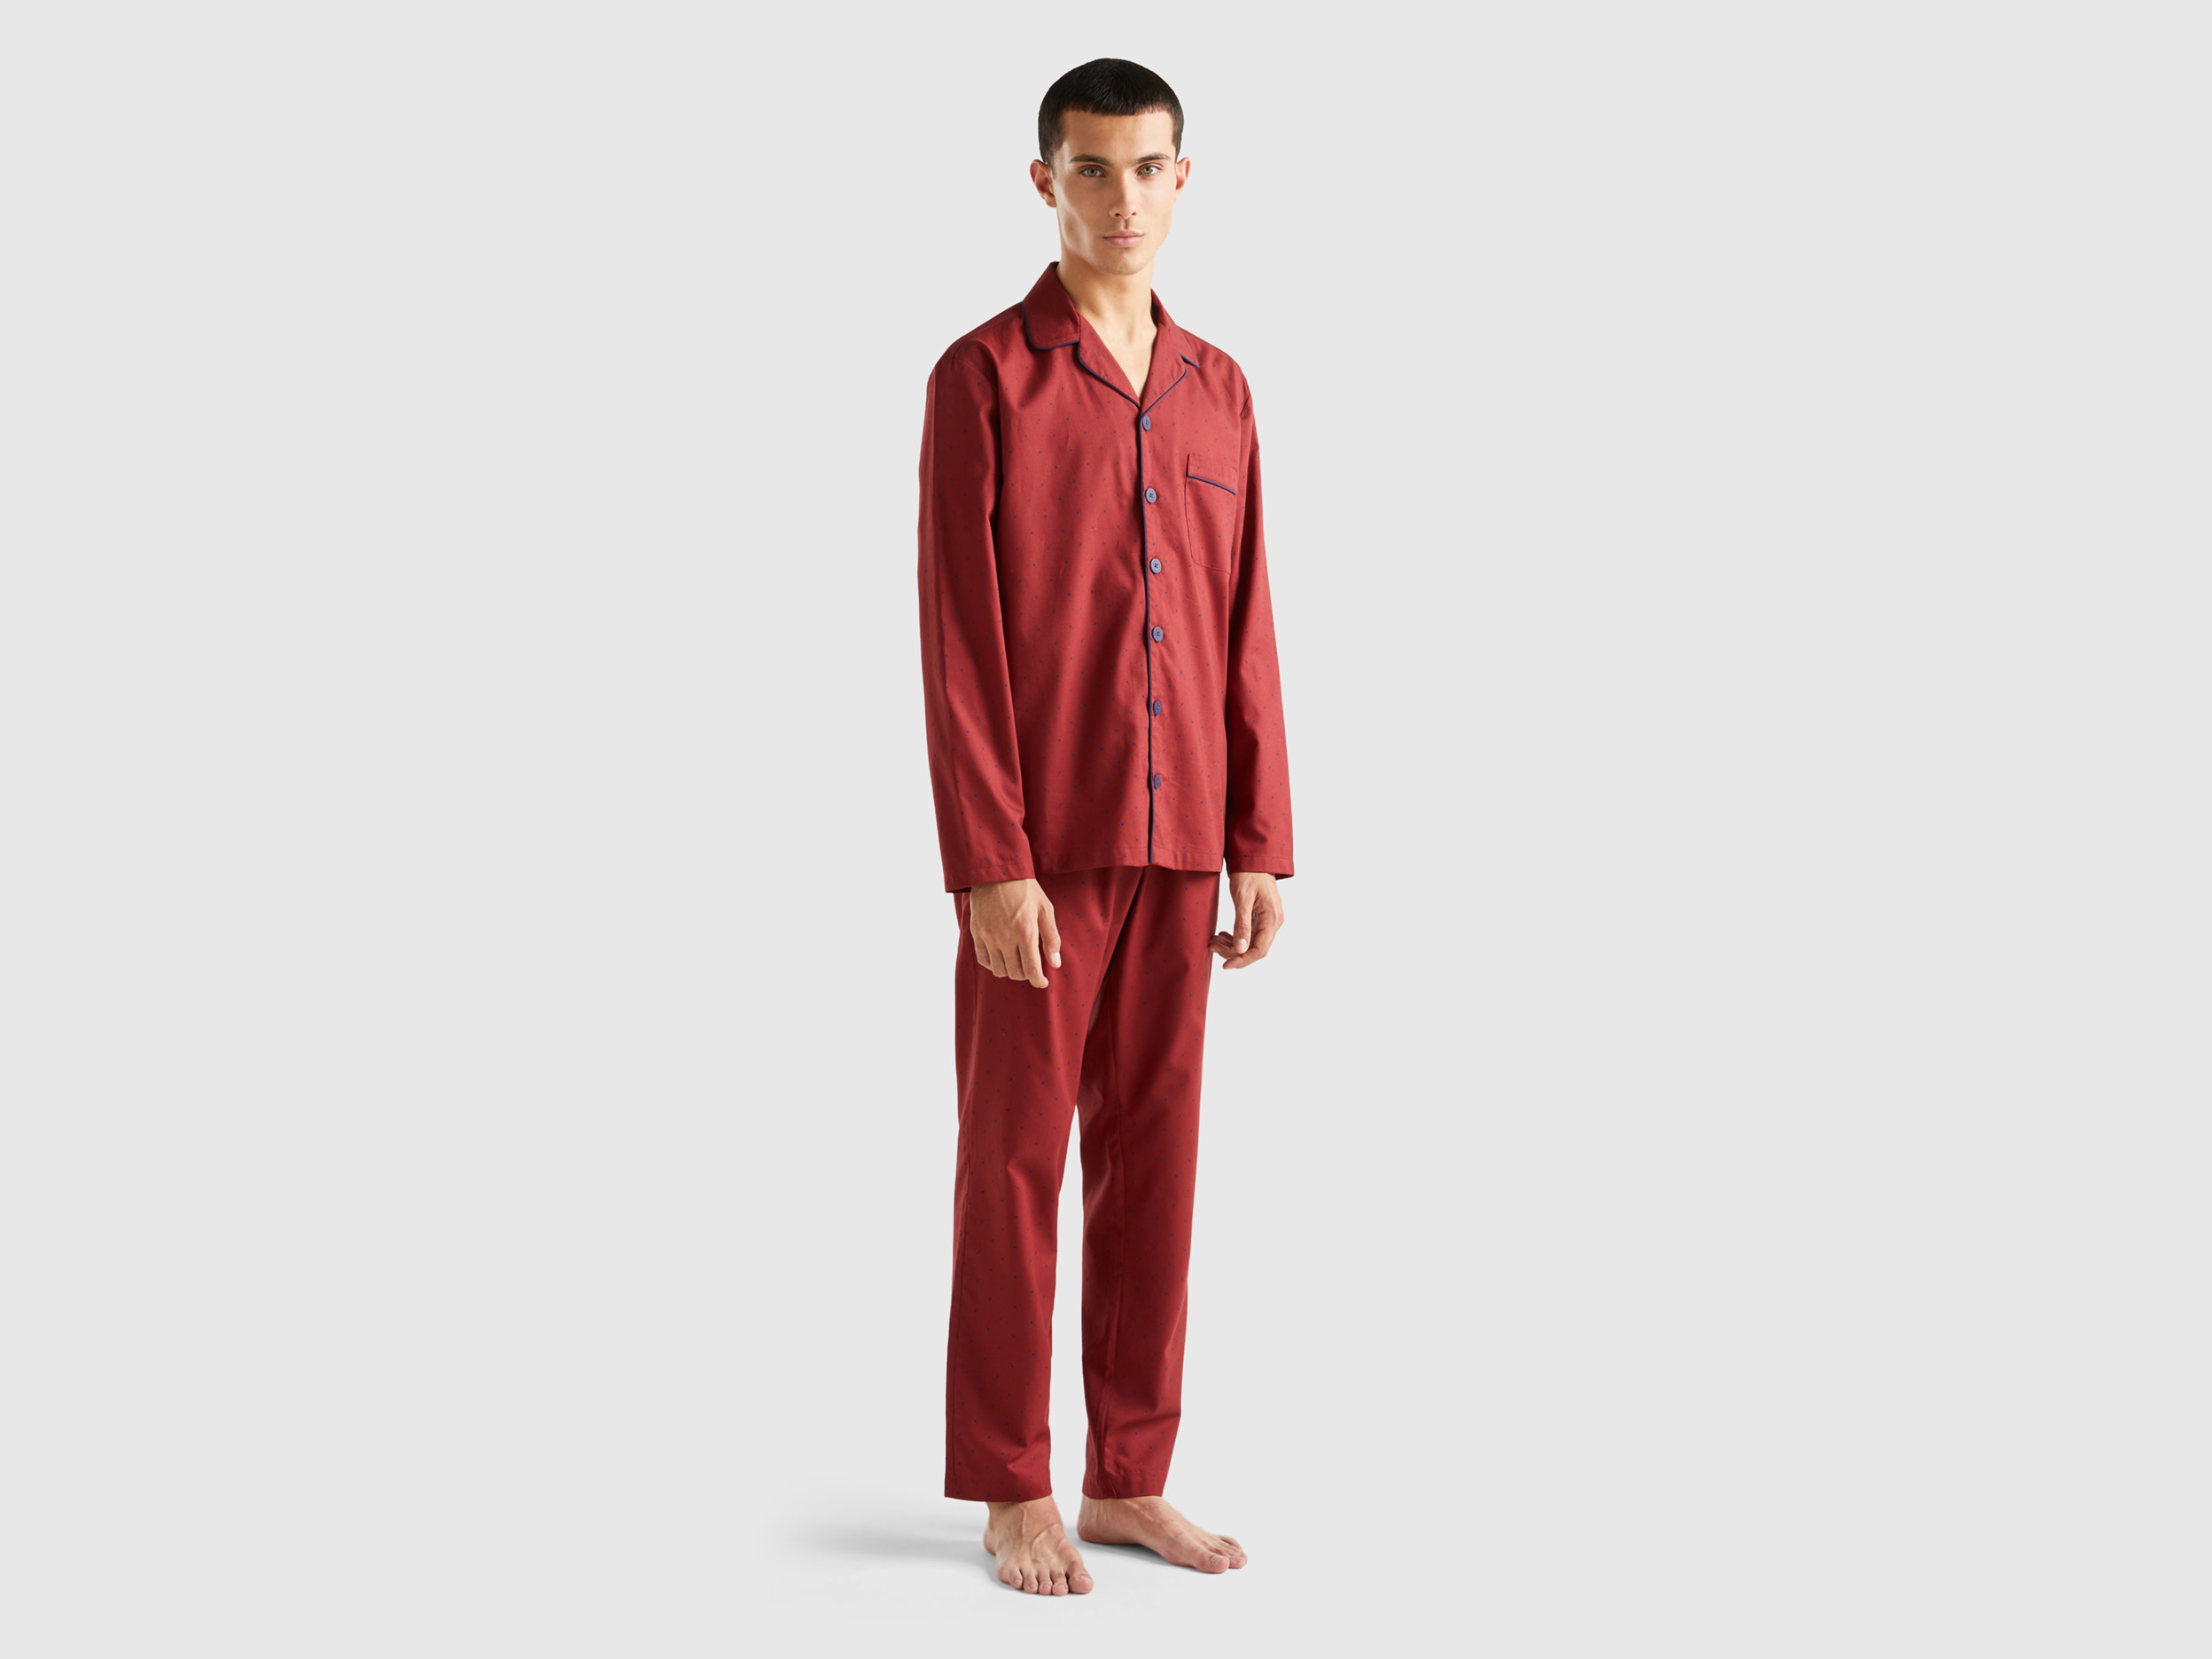 Benetton, Polka Dot Pyjamas With Patch, size M, Red, Men